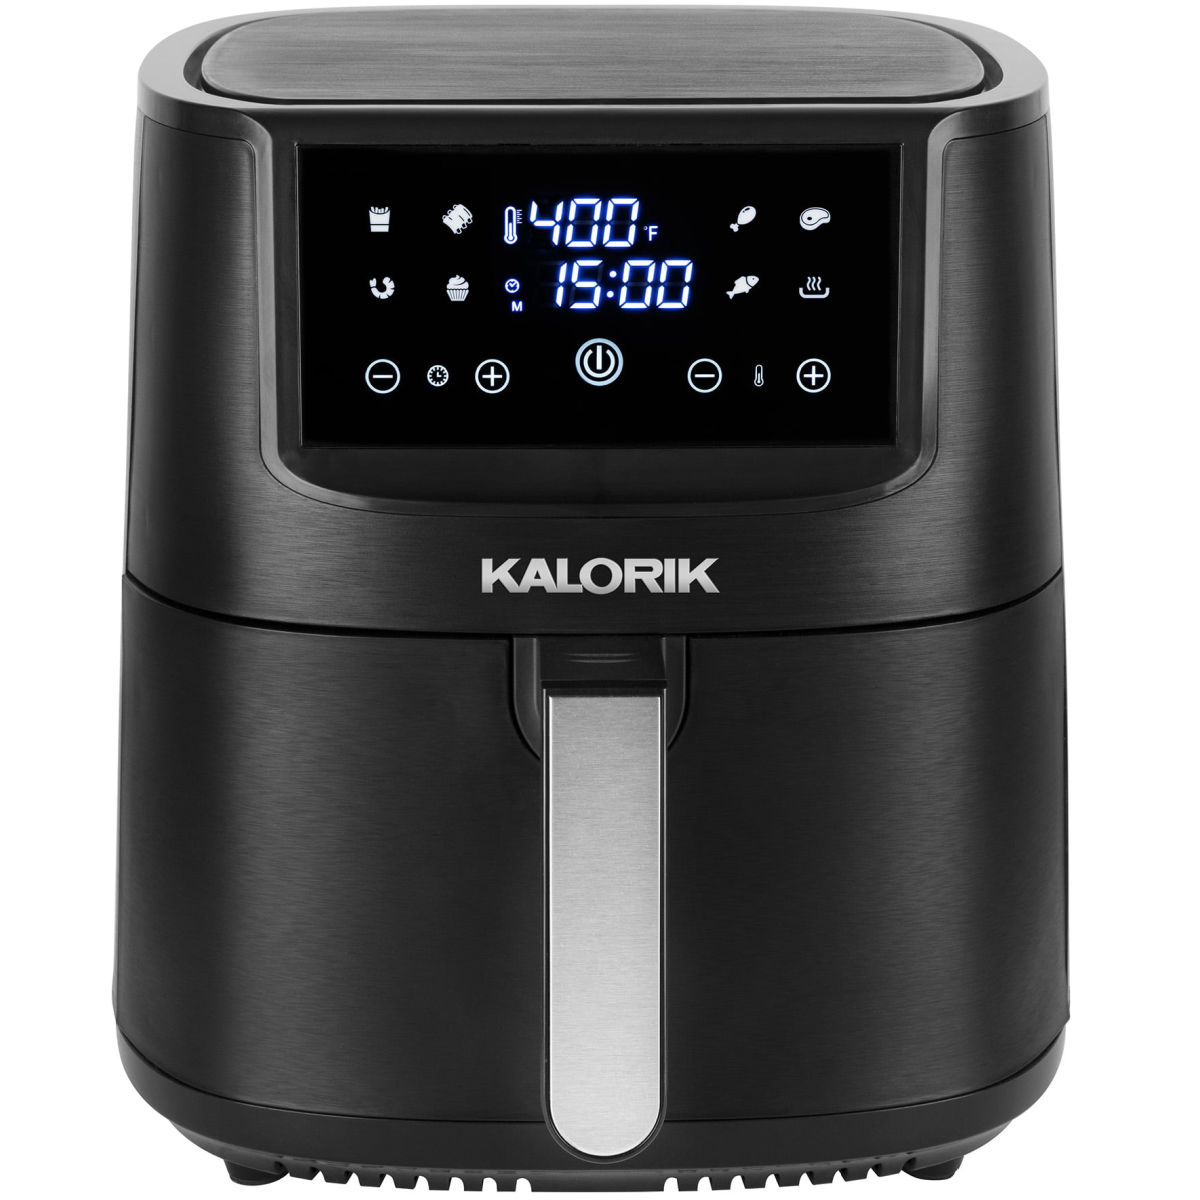 Kalorik FT 51503 BK 8-Quart Digital Touchscreen Air Fryer